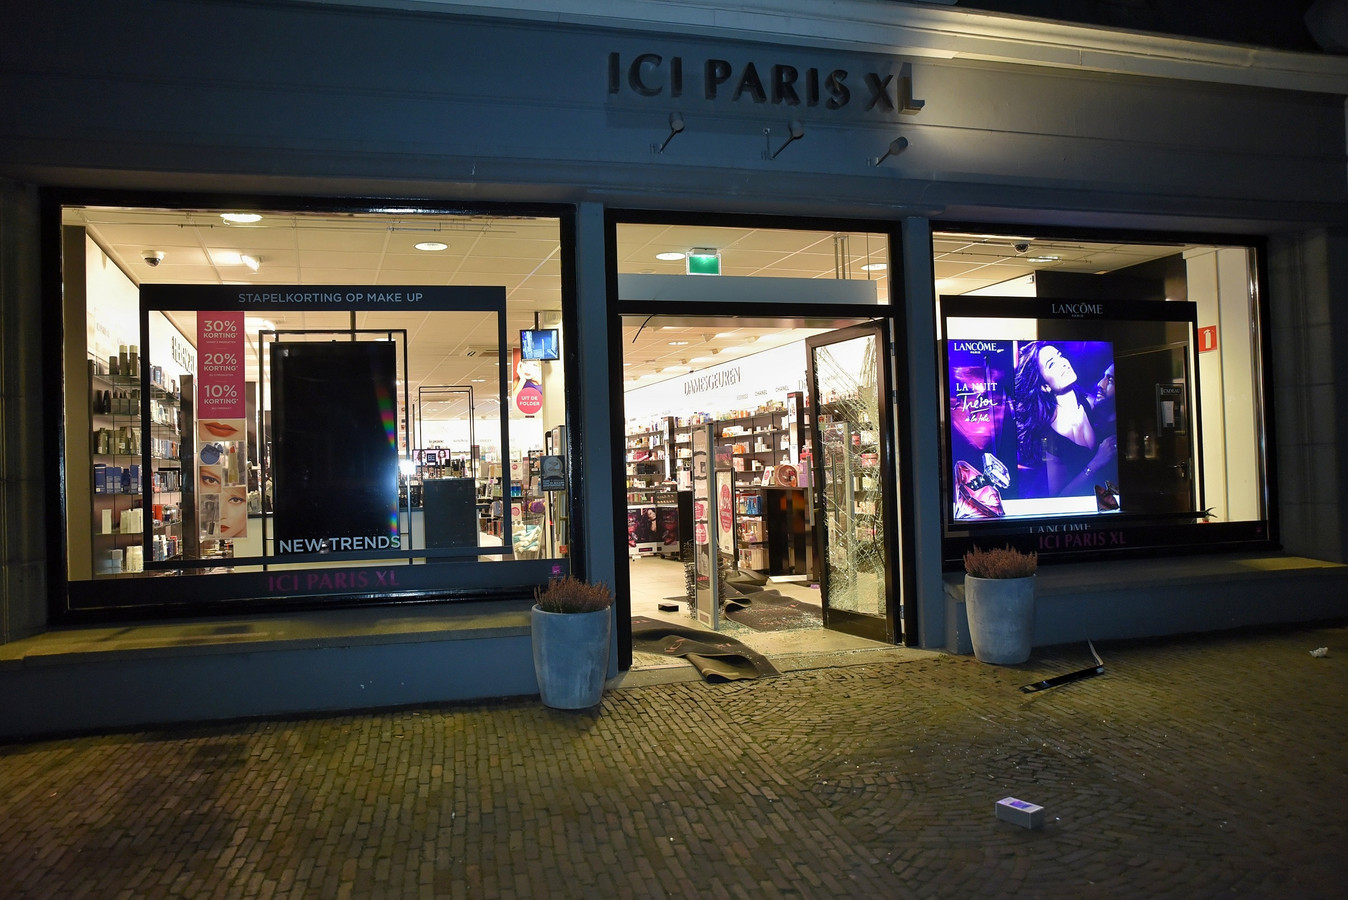 kever as tellen Puinruimen bij ICI Paris XL Oisterwijk na ramkraak, daders spoorloos | Foto  | bd.nl